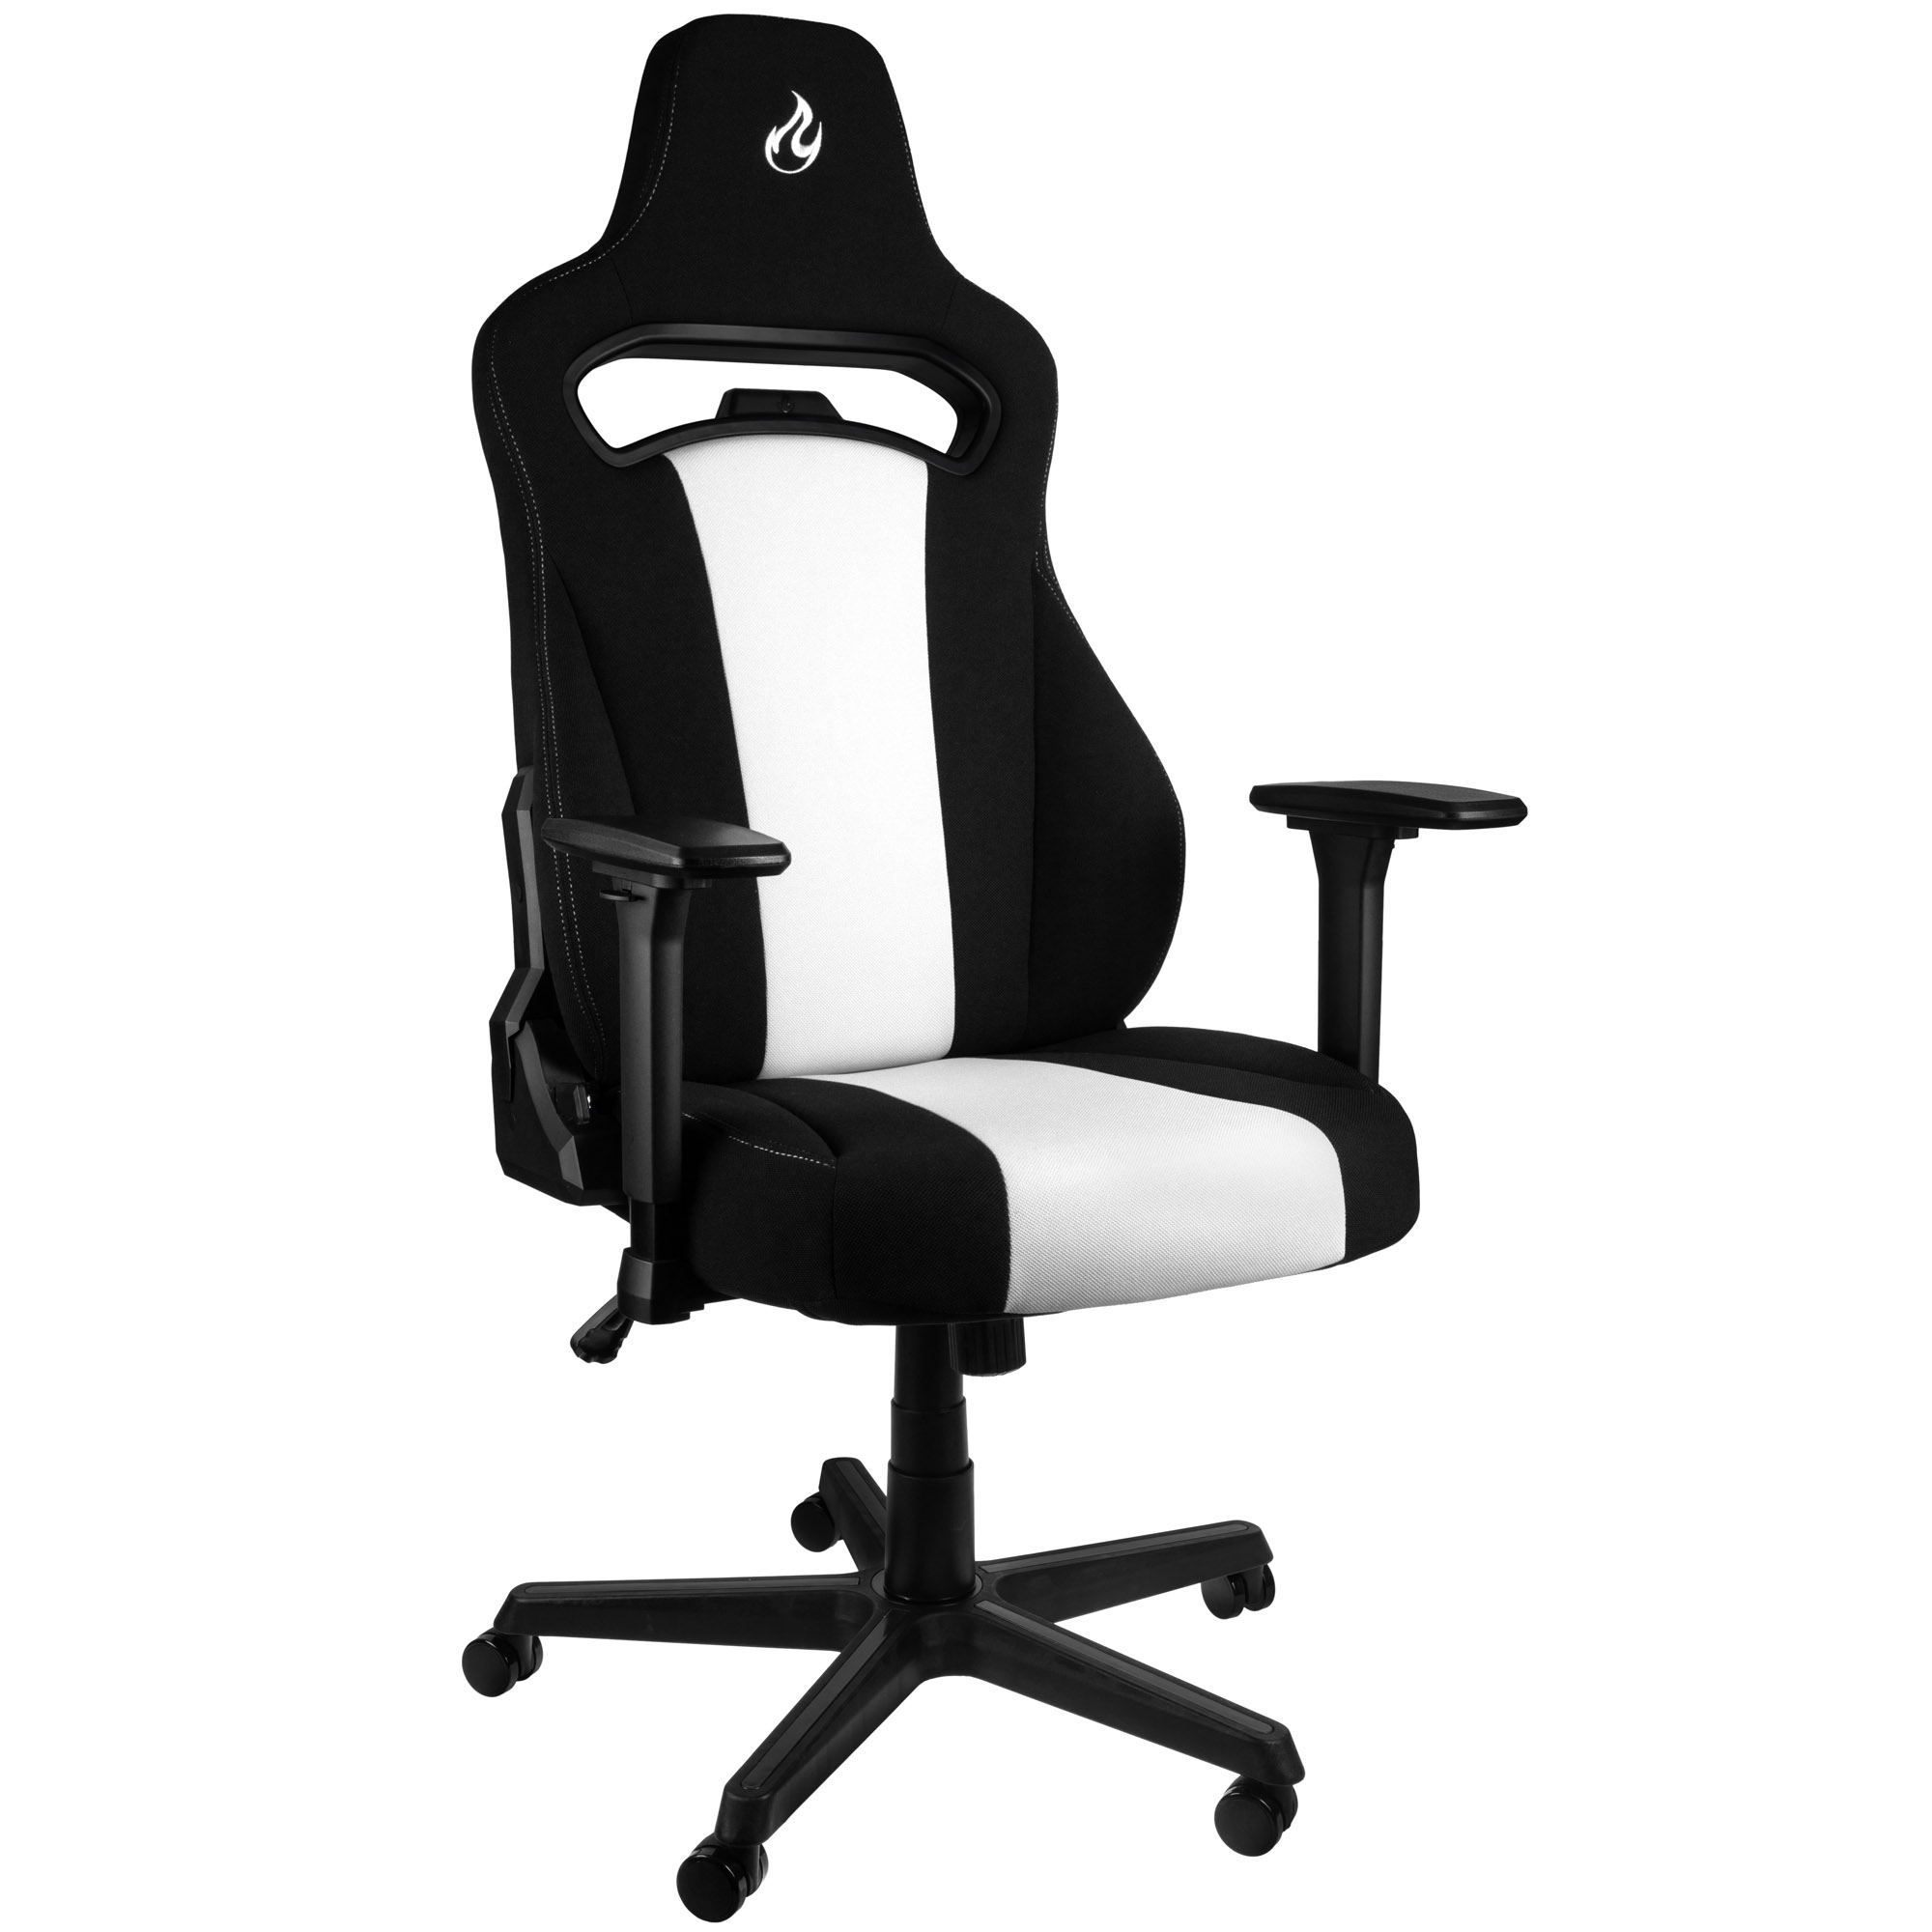 Nitro Concepts - E250 Gaming Chair Black/White